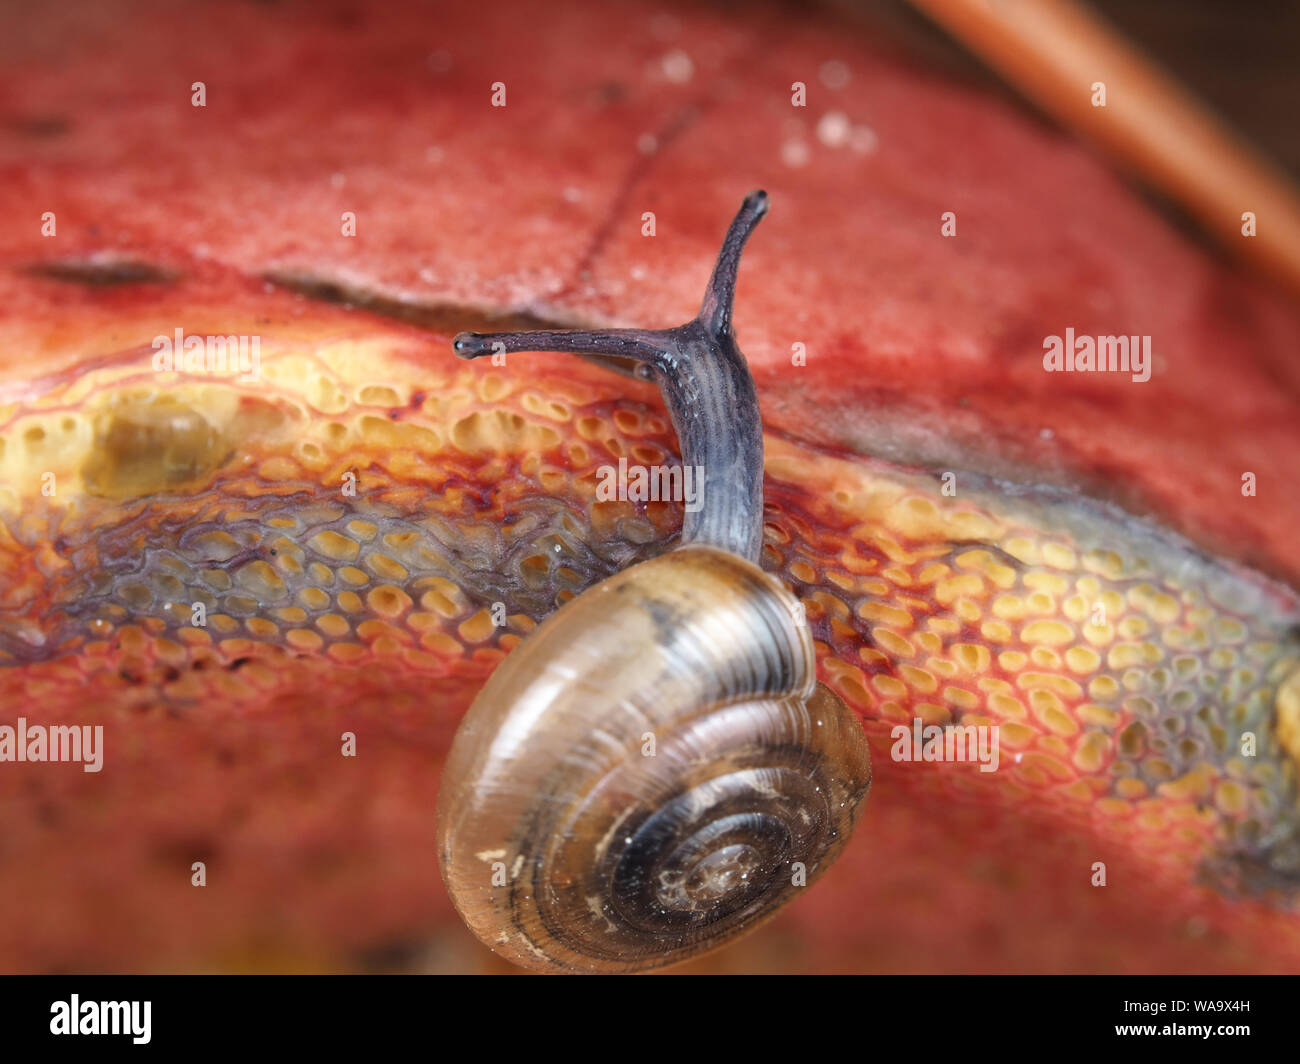 Tiny snail (possibly Ventridens species) on mushroom Stock Photo